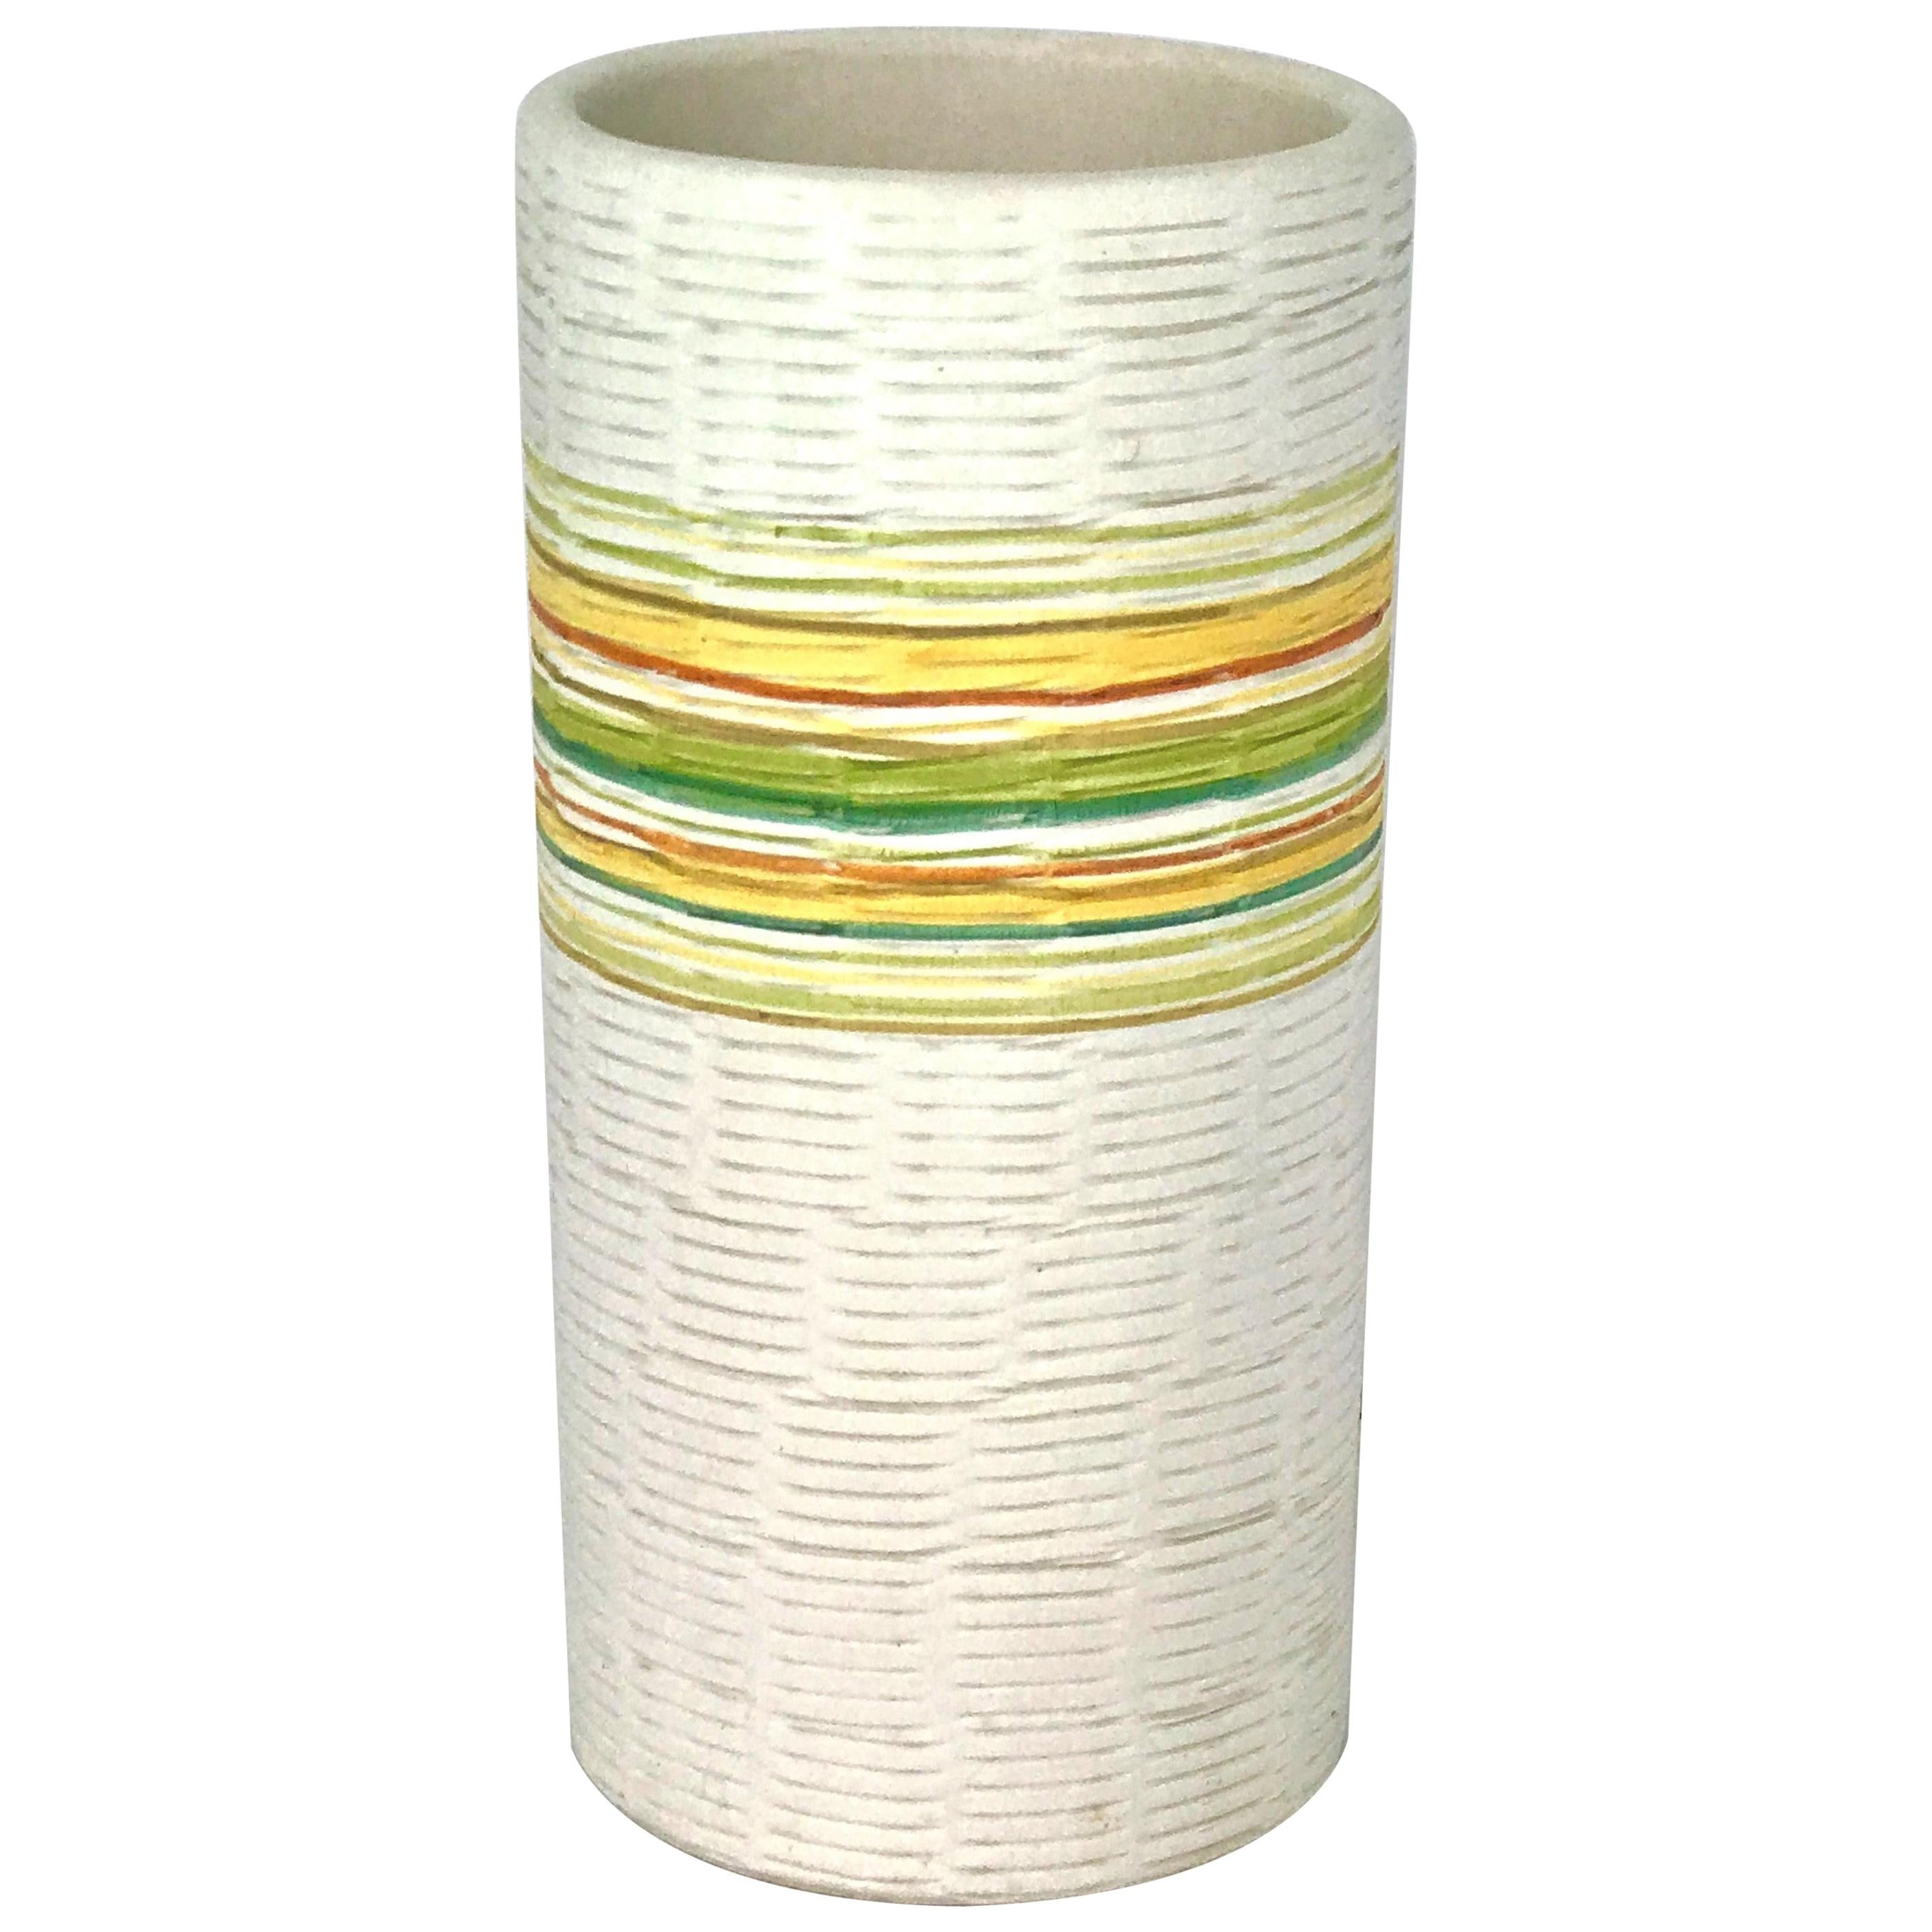 Organic Modern Raymor Bitossi Textured Londi Attributed Pottery Vase 1960s Italy